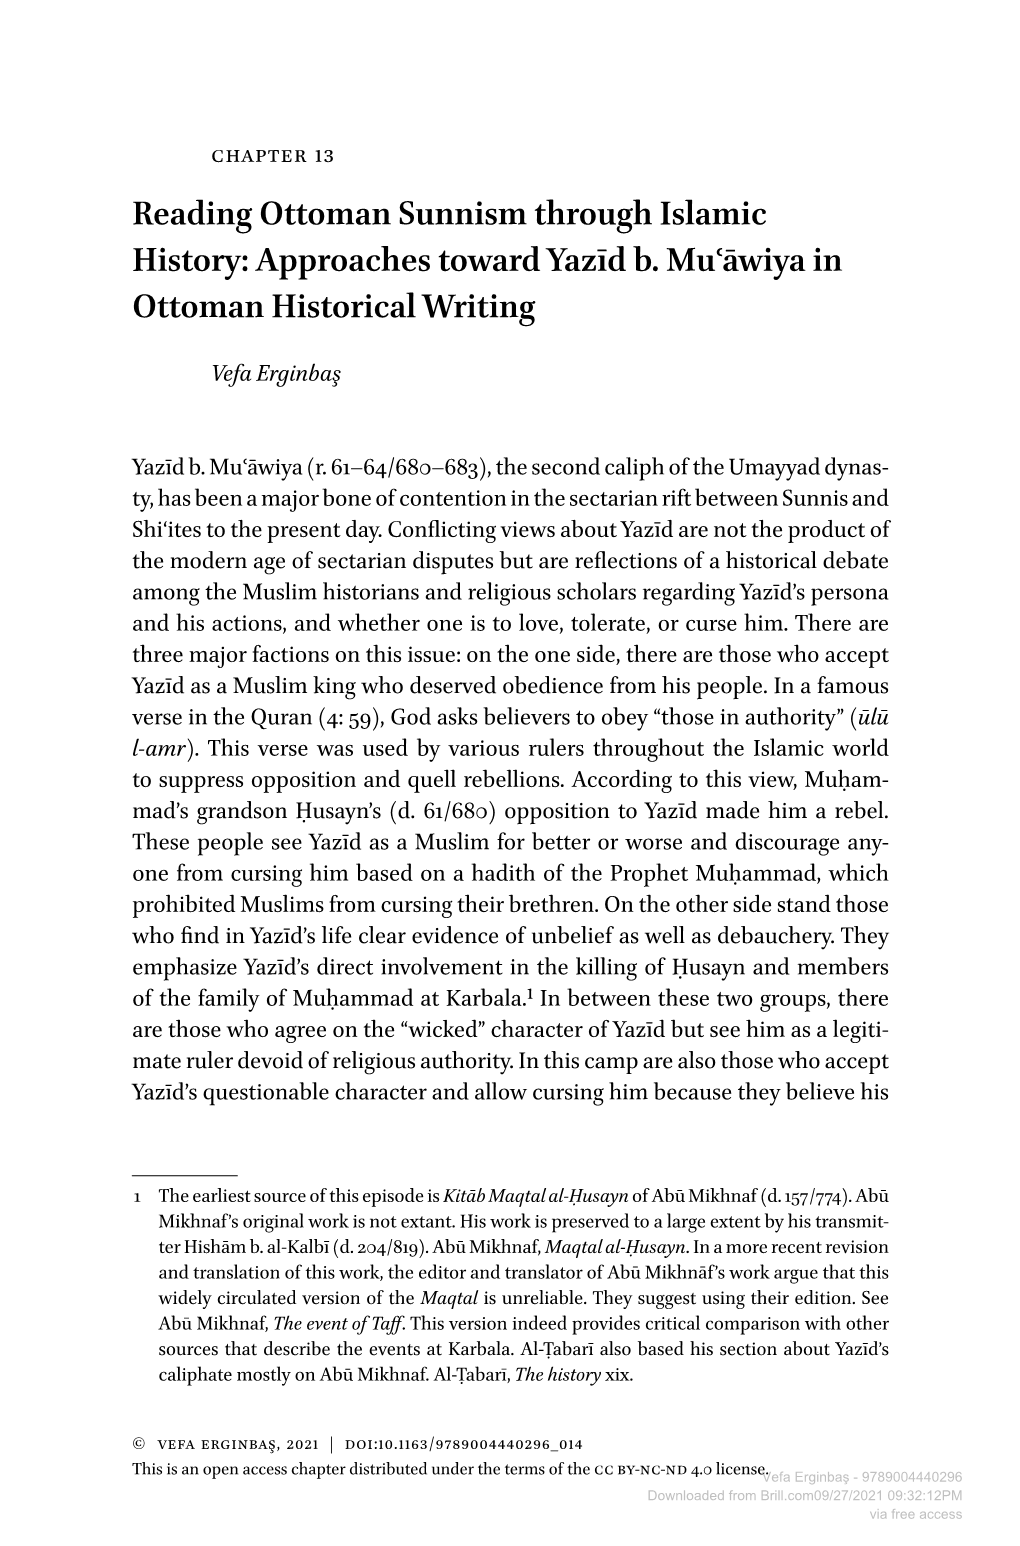 Reading Ottoman Sunnism Through Islamic History: Approaches Toward Yazīd B